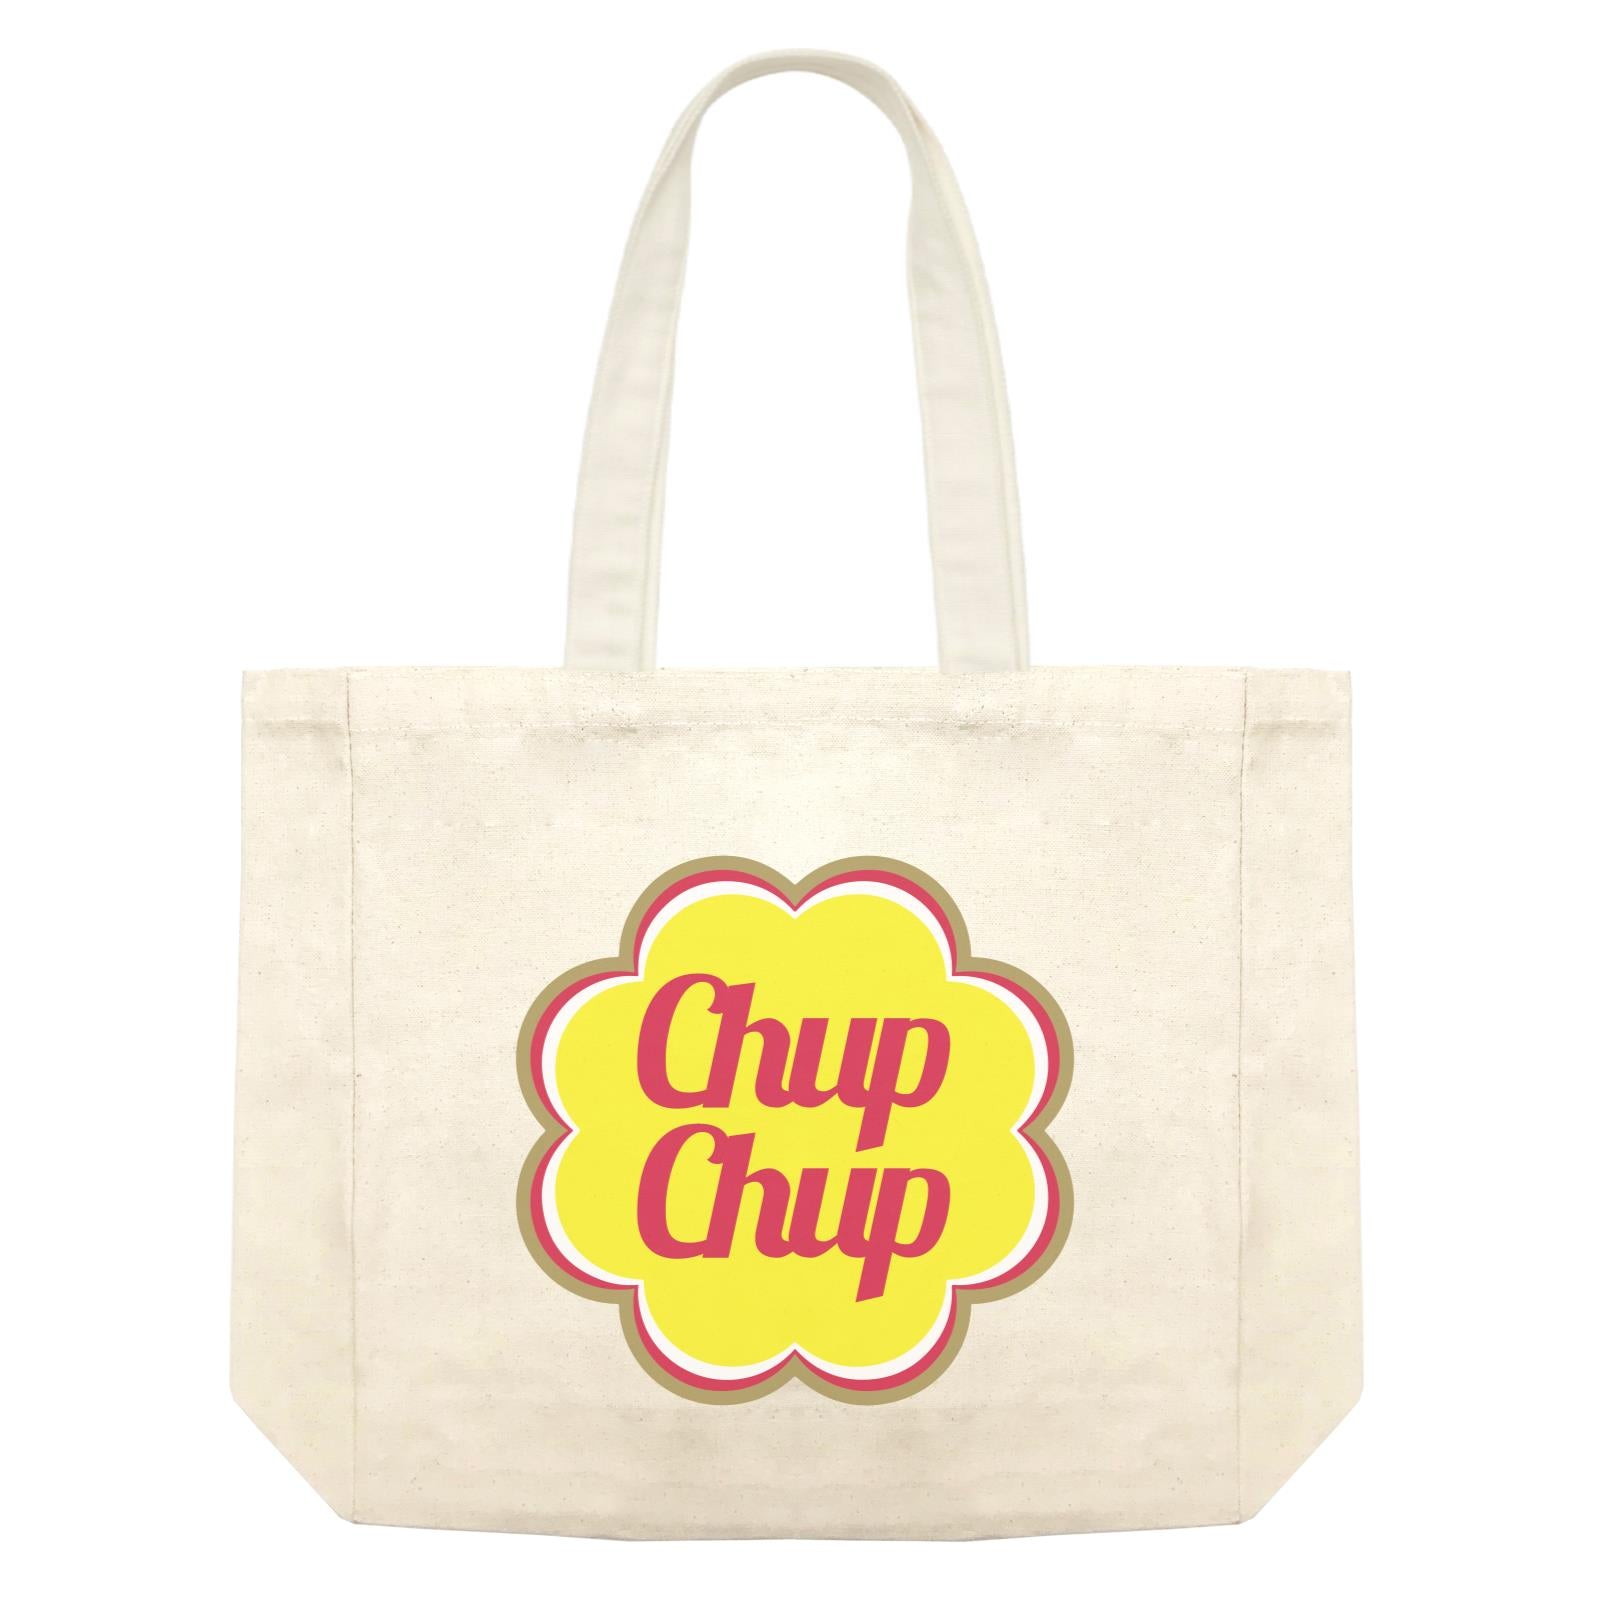 Slang Statement Chup Chup Accessories Shopping Bag